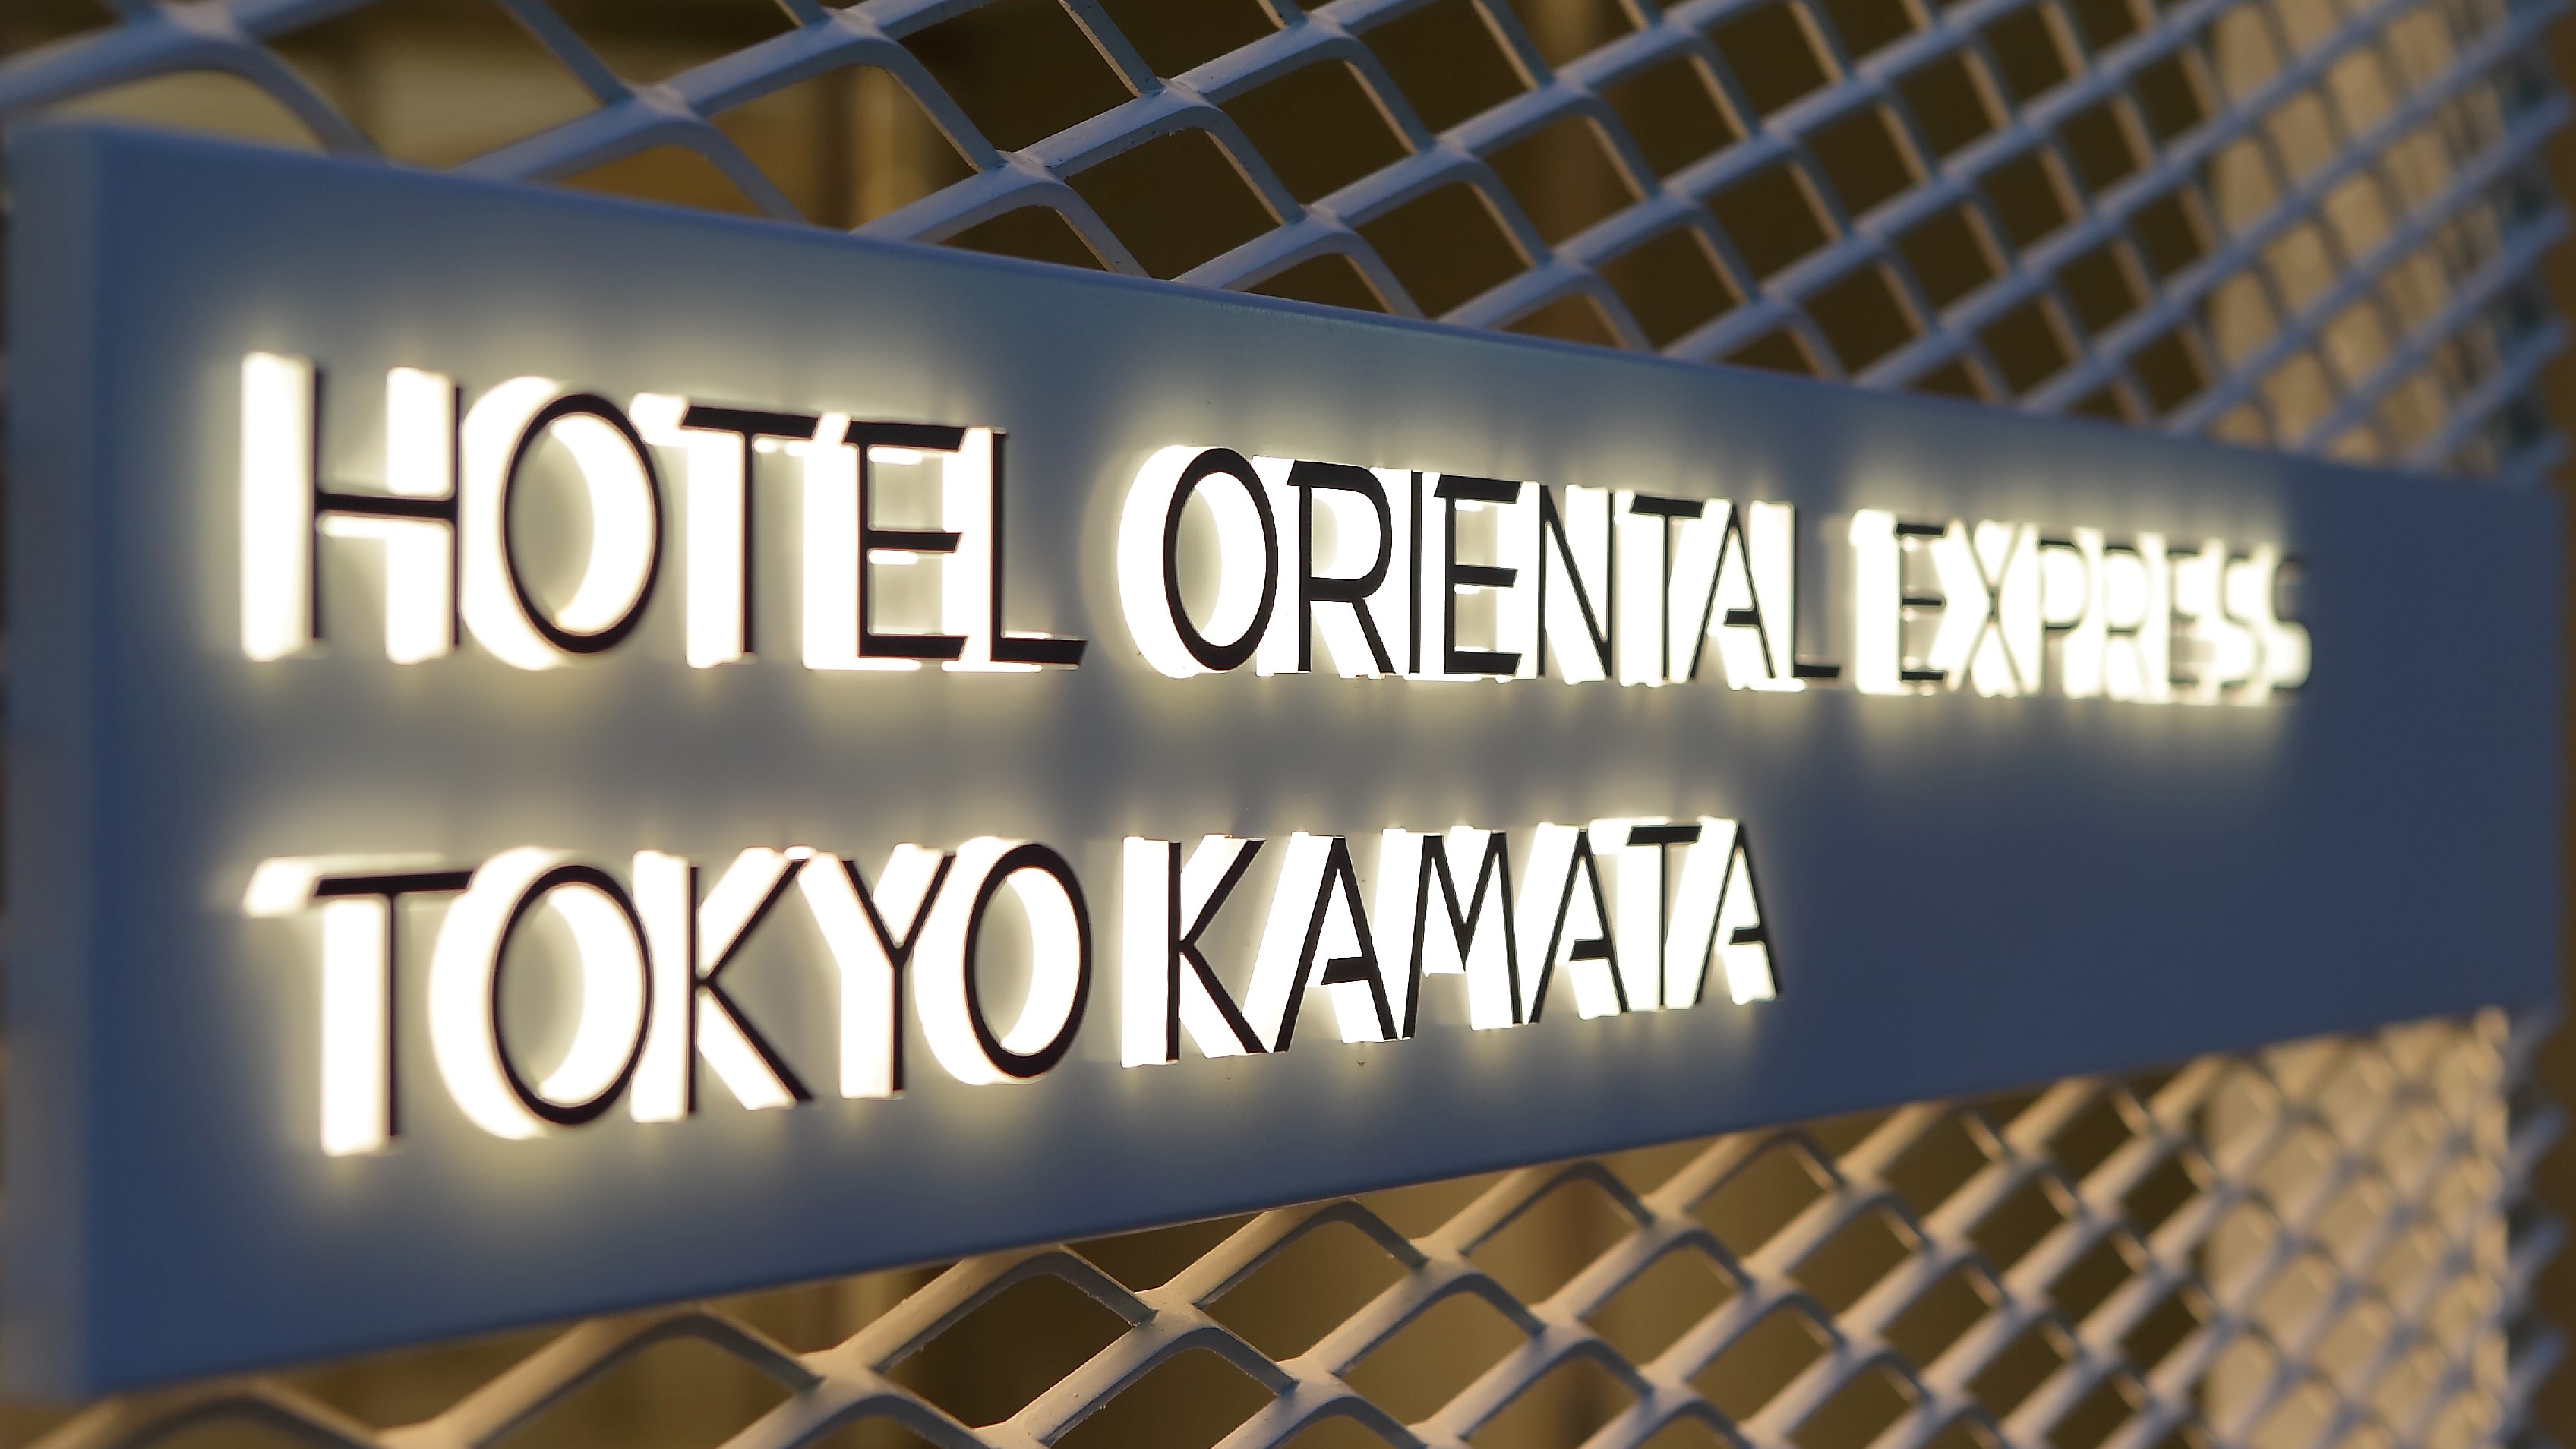 Front entrance "Oriental Express Tokyo Kamata"